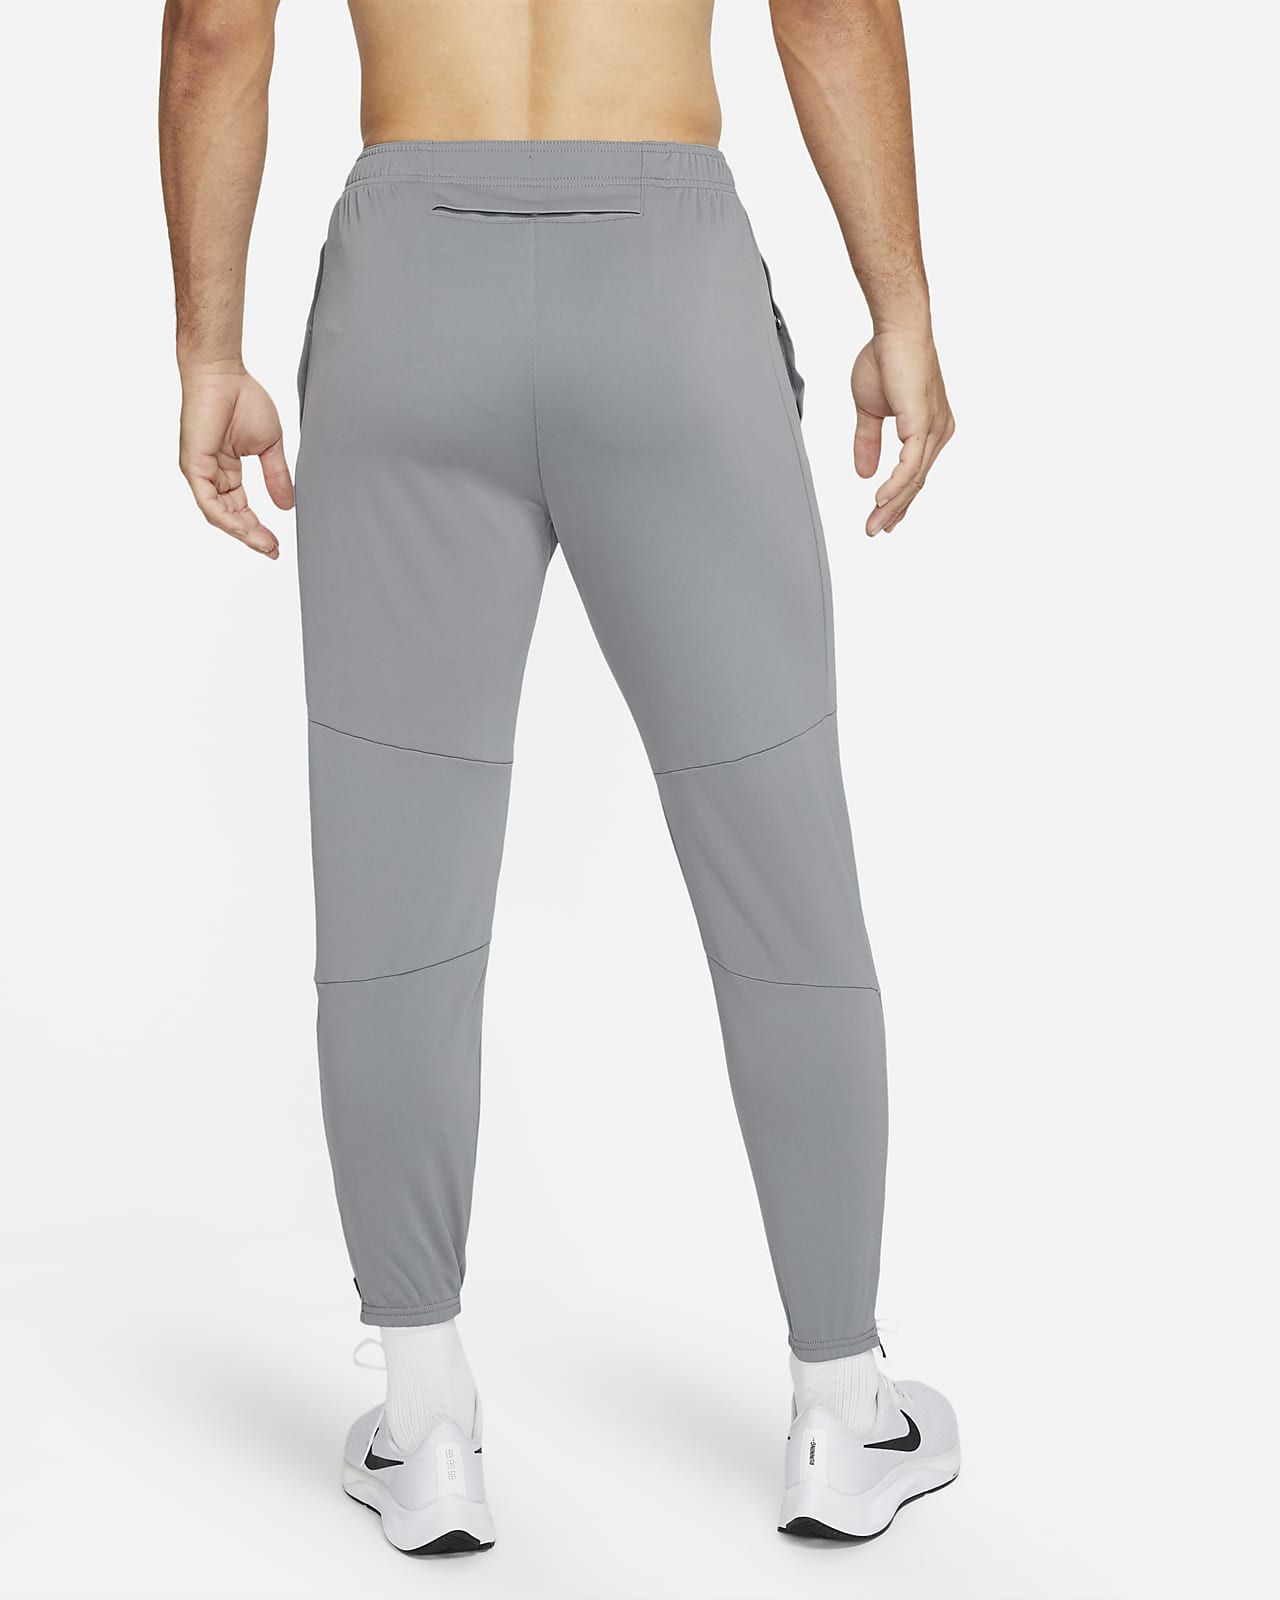 favorito Soltero Tutor Pants de tejido Knit de running para hombre Nike Dri-FIT Challenger. Nike .com